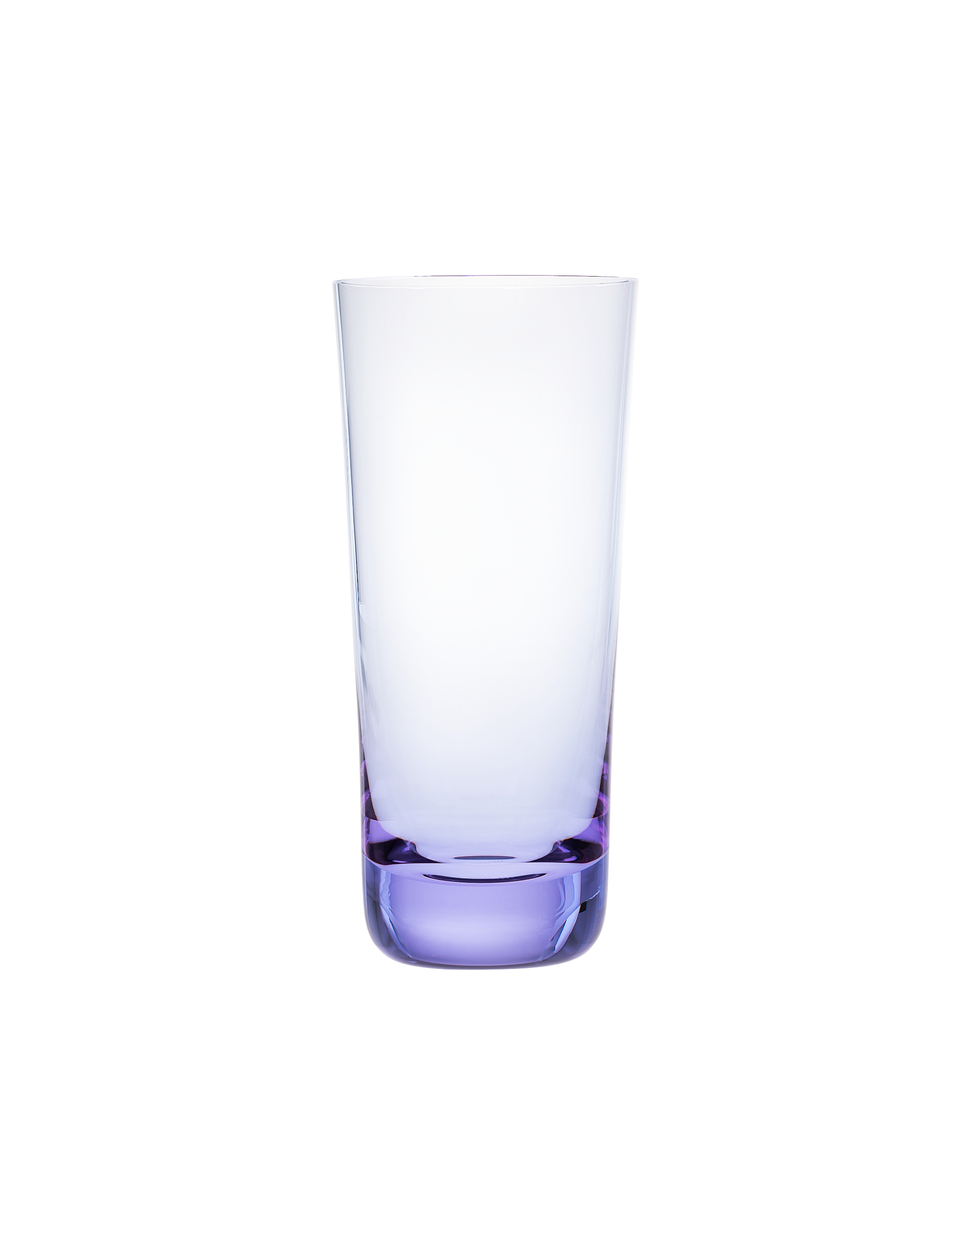 Conus glass, 400 ml